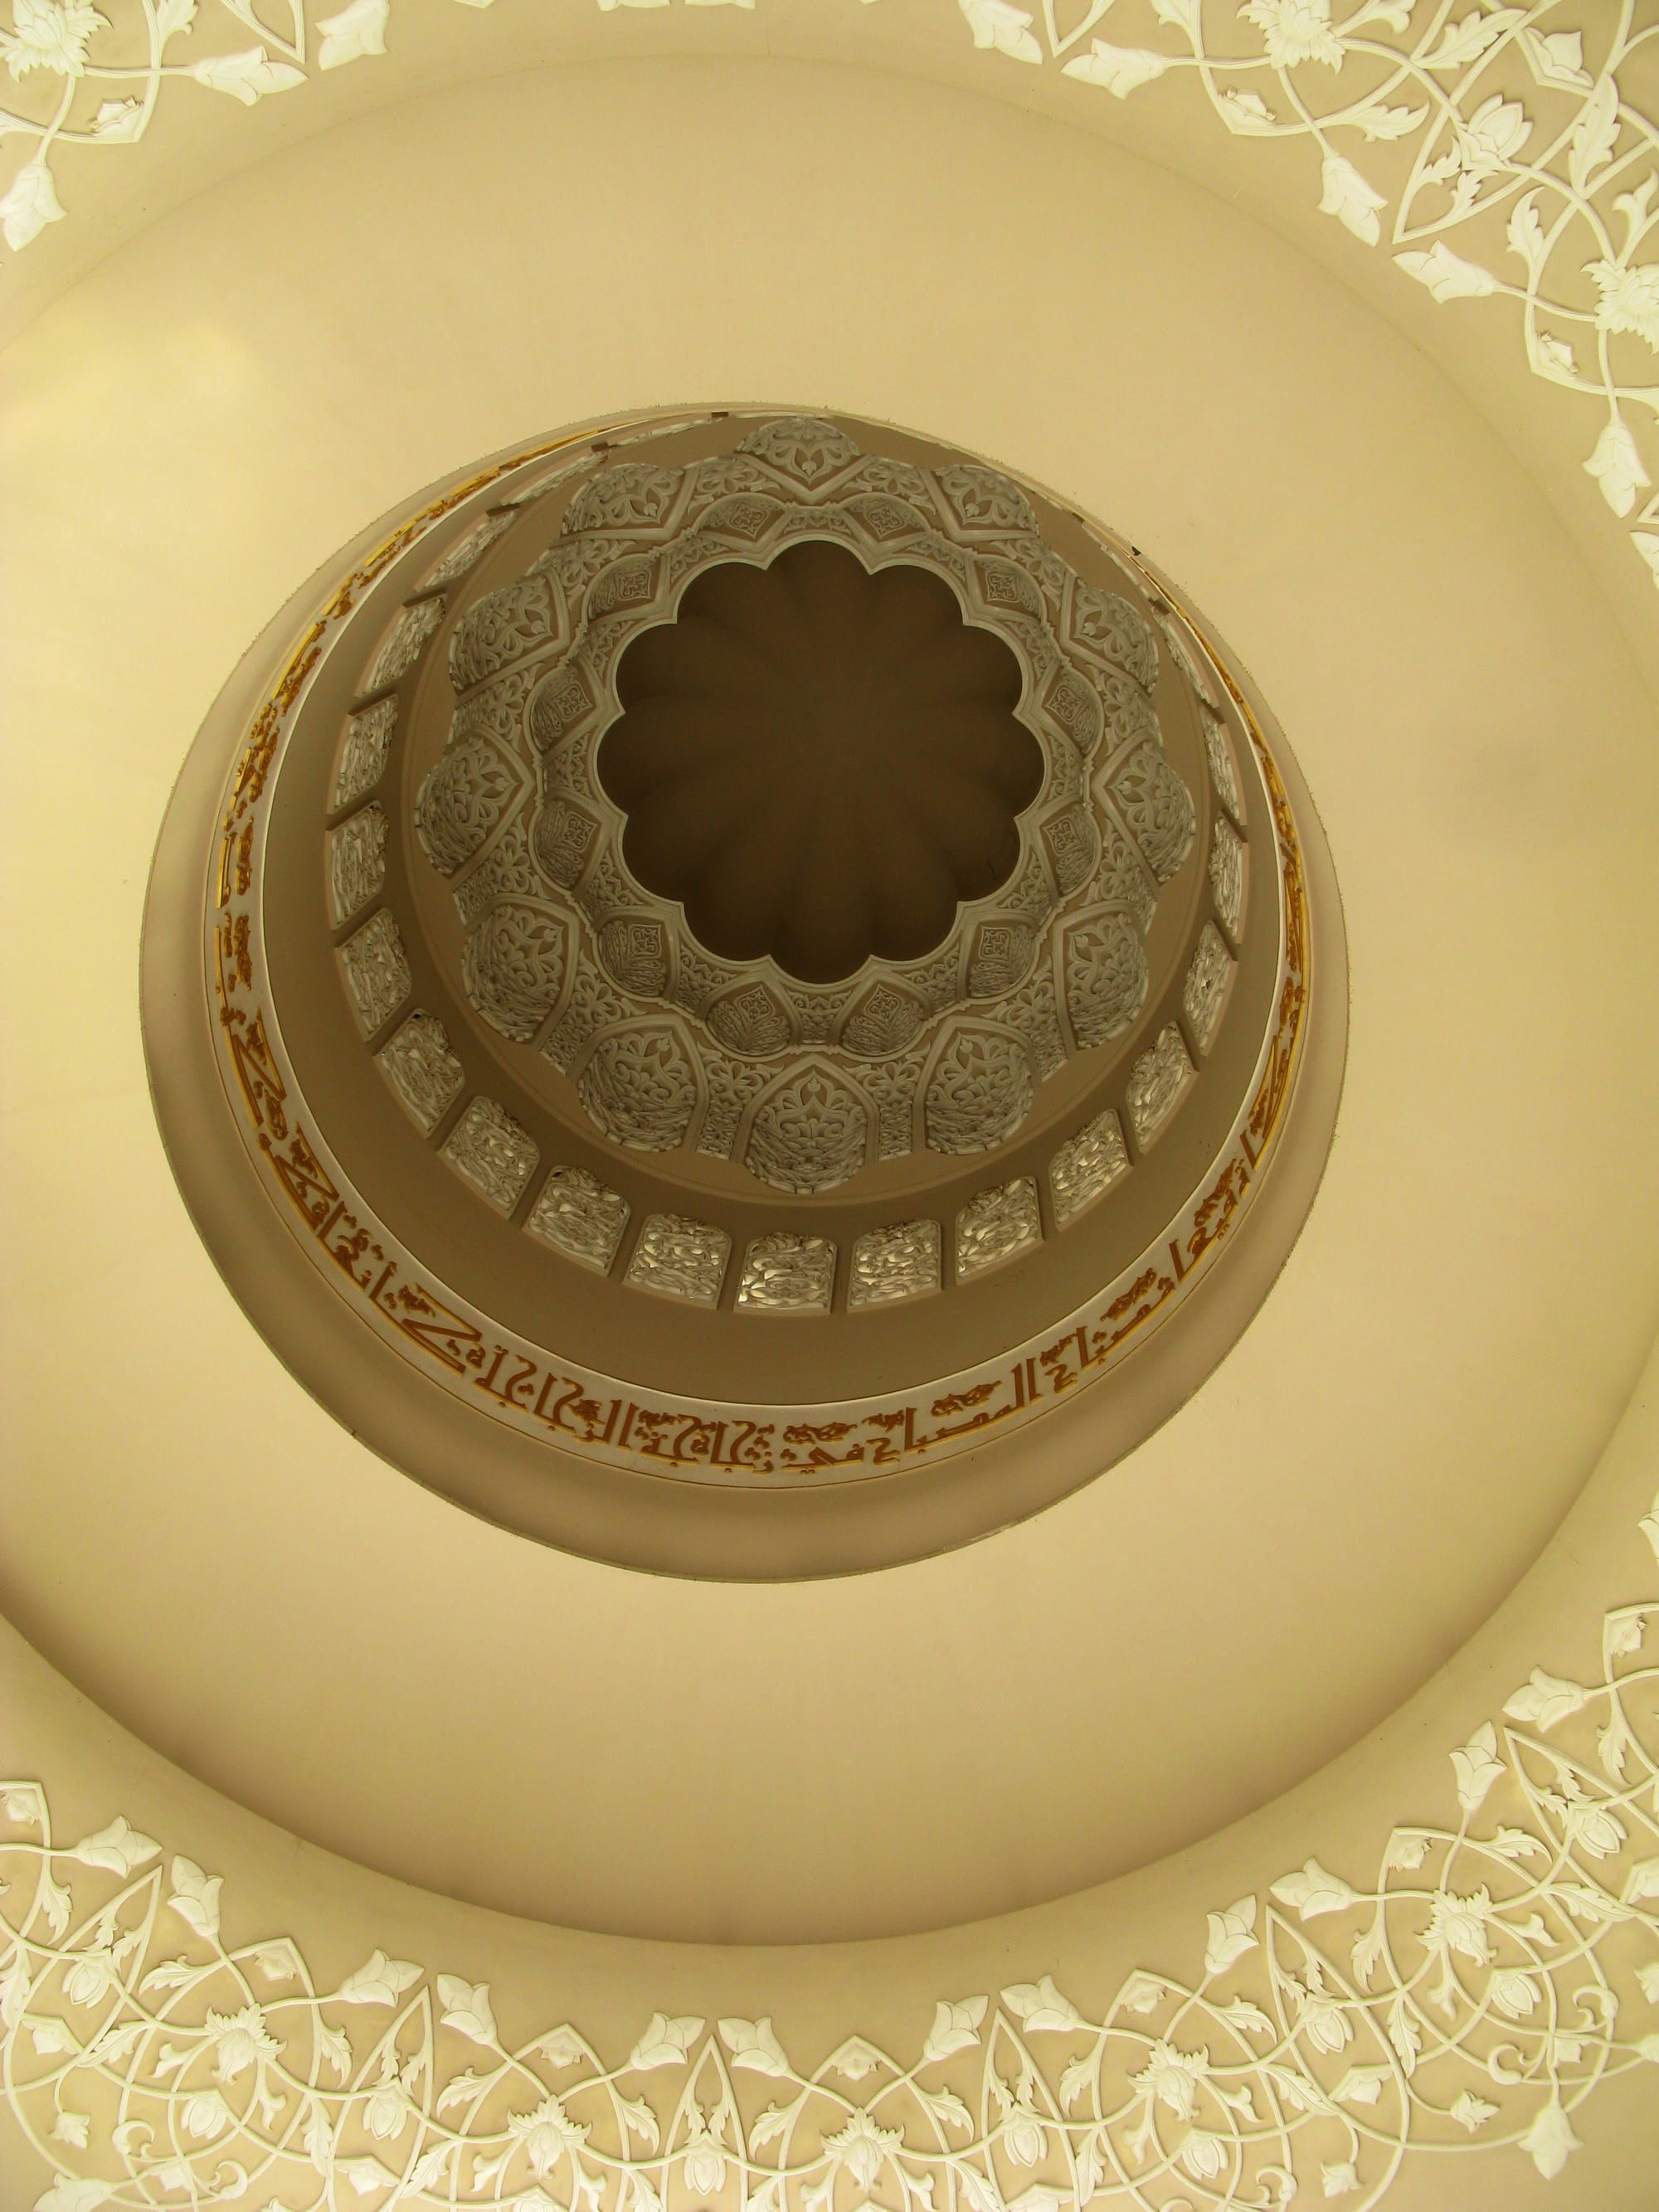 La grande mosquée d'Abu Dhabi